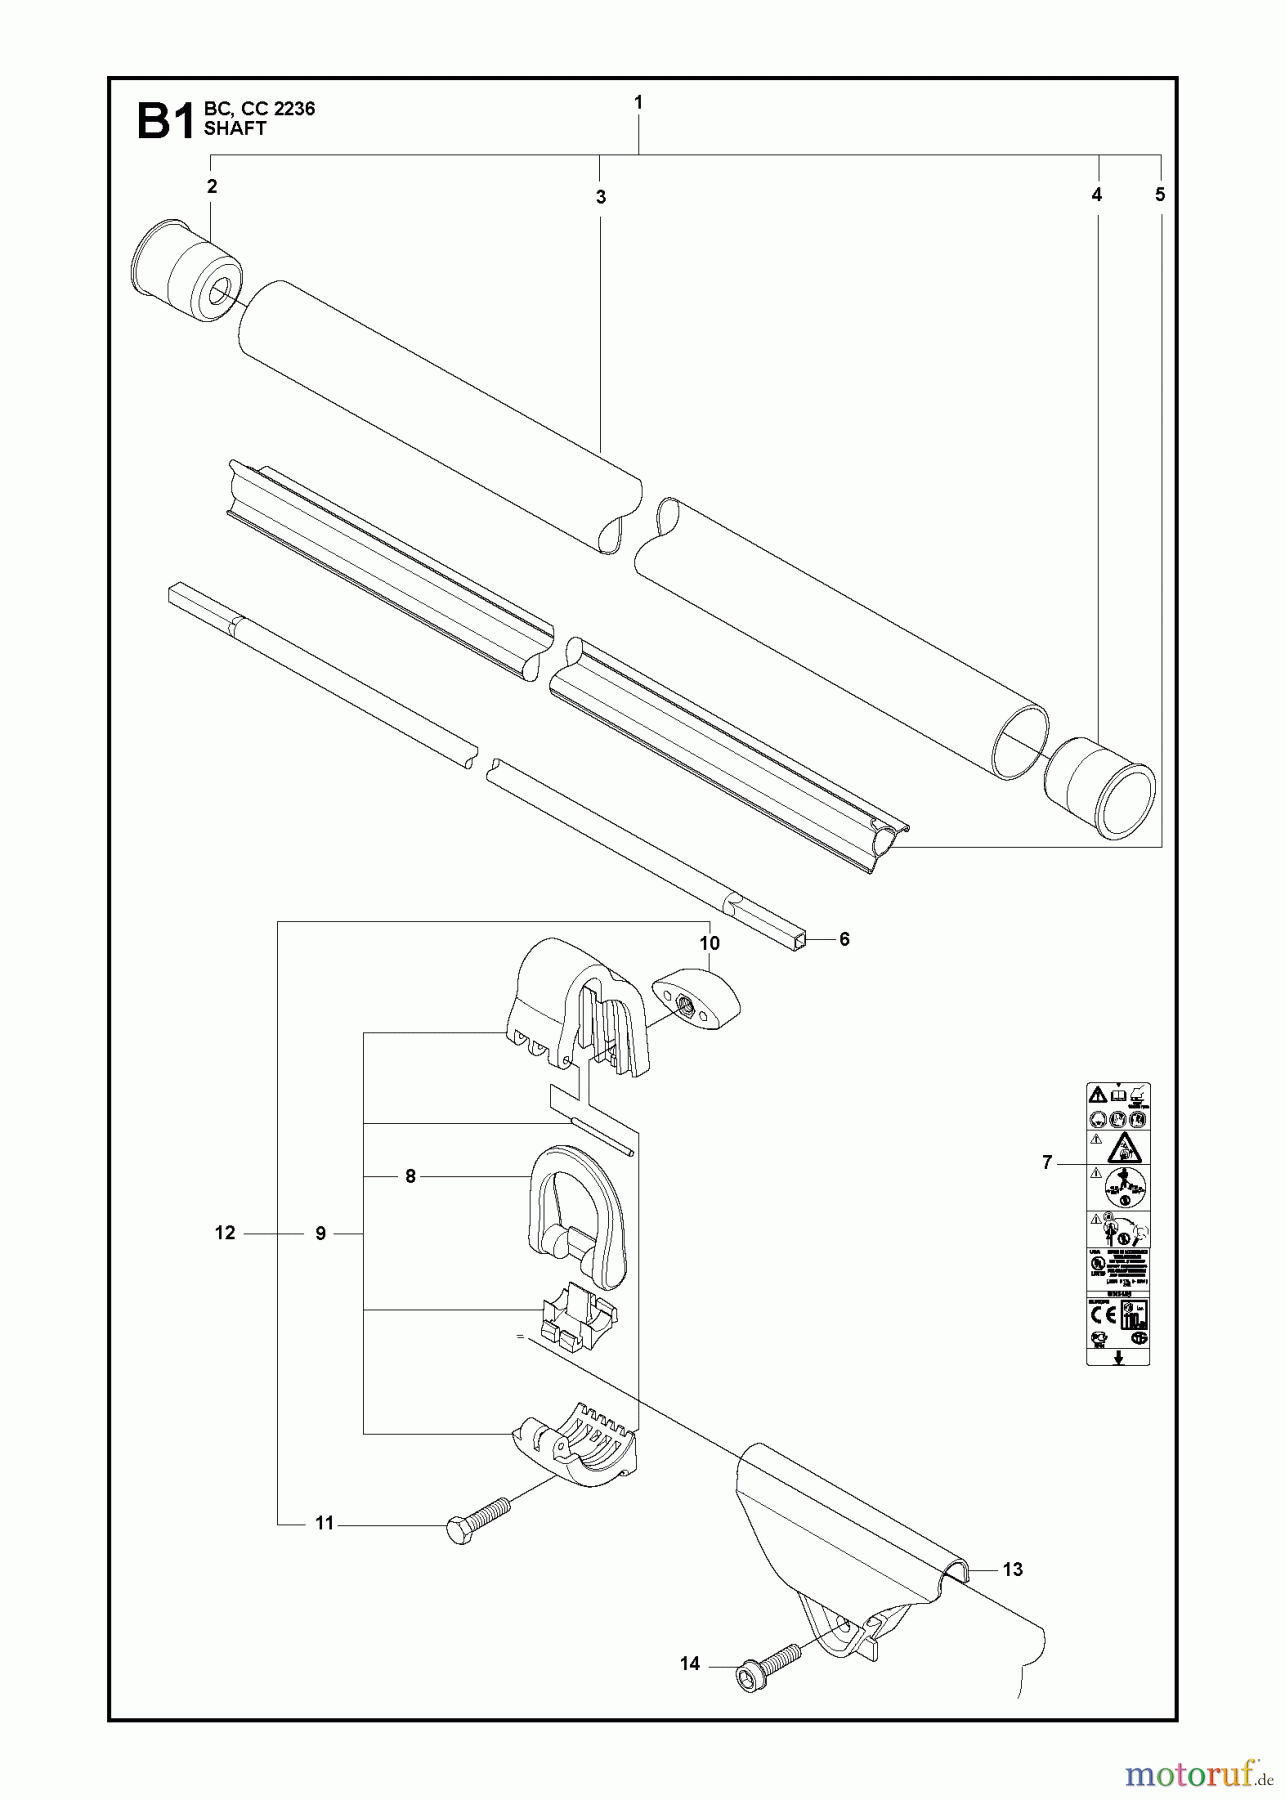  Jonsered Motorsensen, Trimmer BC2236 - Jonsered Brushcutter (2010-11) SHAFT